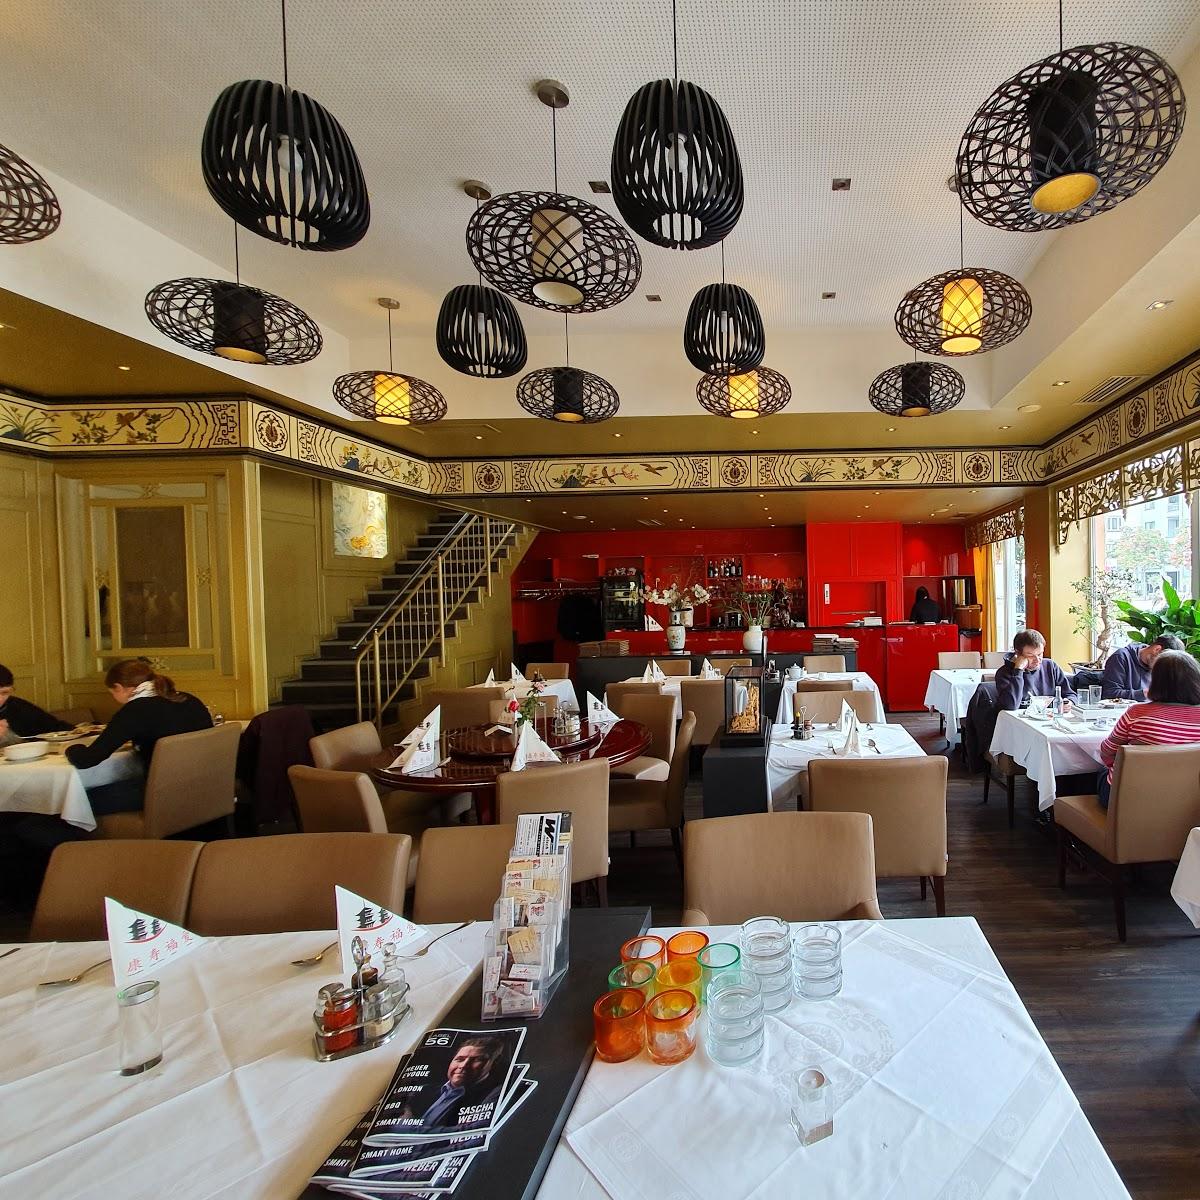 Restaurant "China-Restaurant Asia" in Koblenz